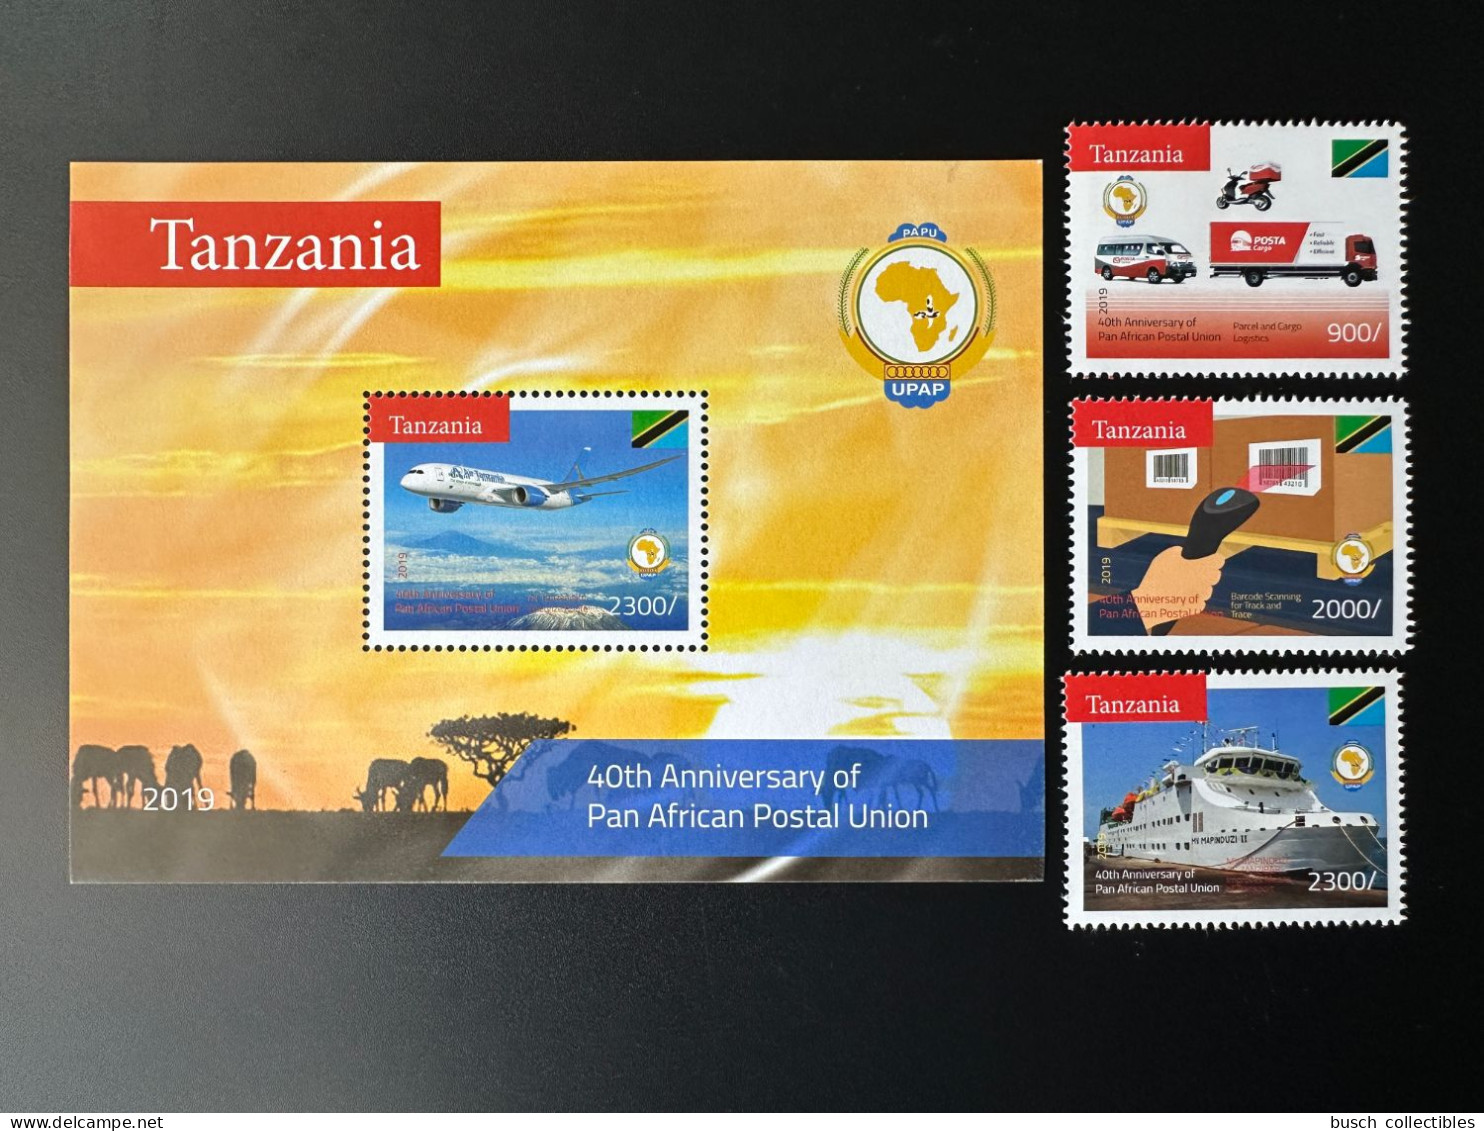 Tanzania Tanzanie Tansania 2019 / 2020 Mi. 5447 - 5449 Bl. 716 PAPU UPAP 40th Anniversary Airplane Flugzeug Avion Ship - Tanzania (1964-...)